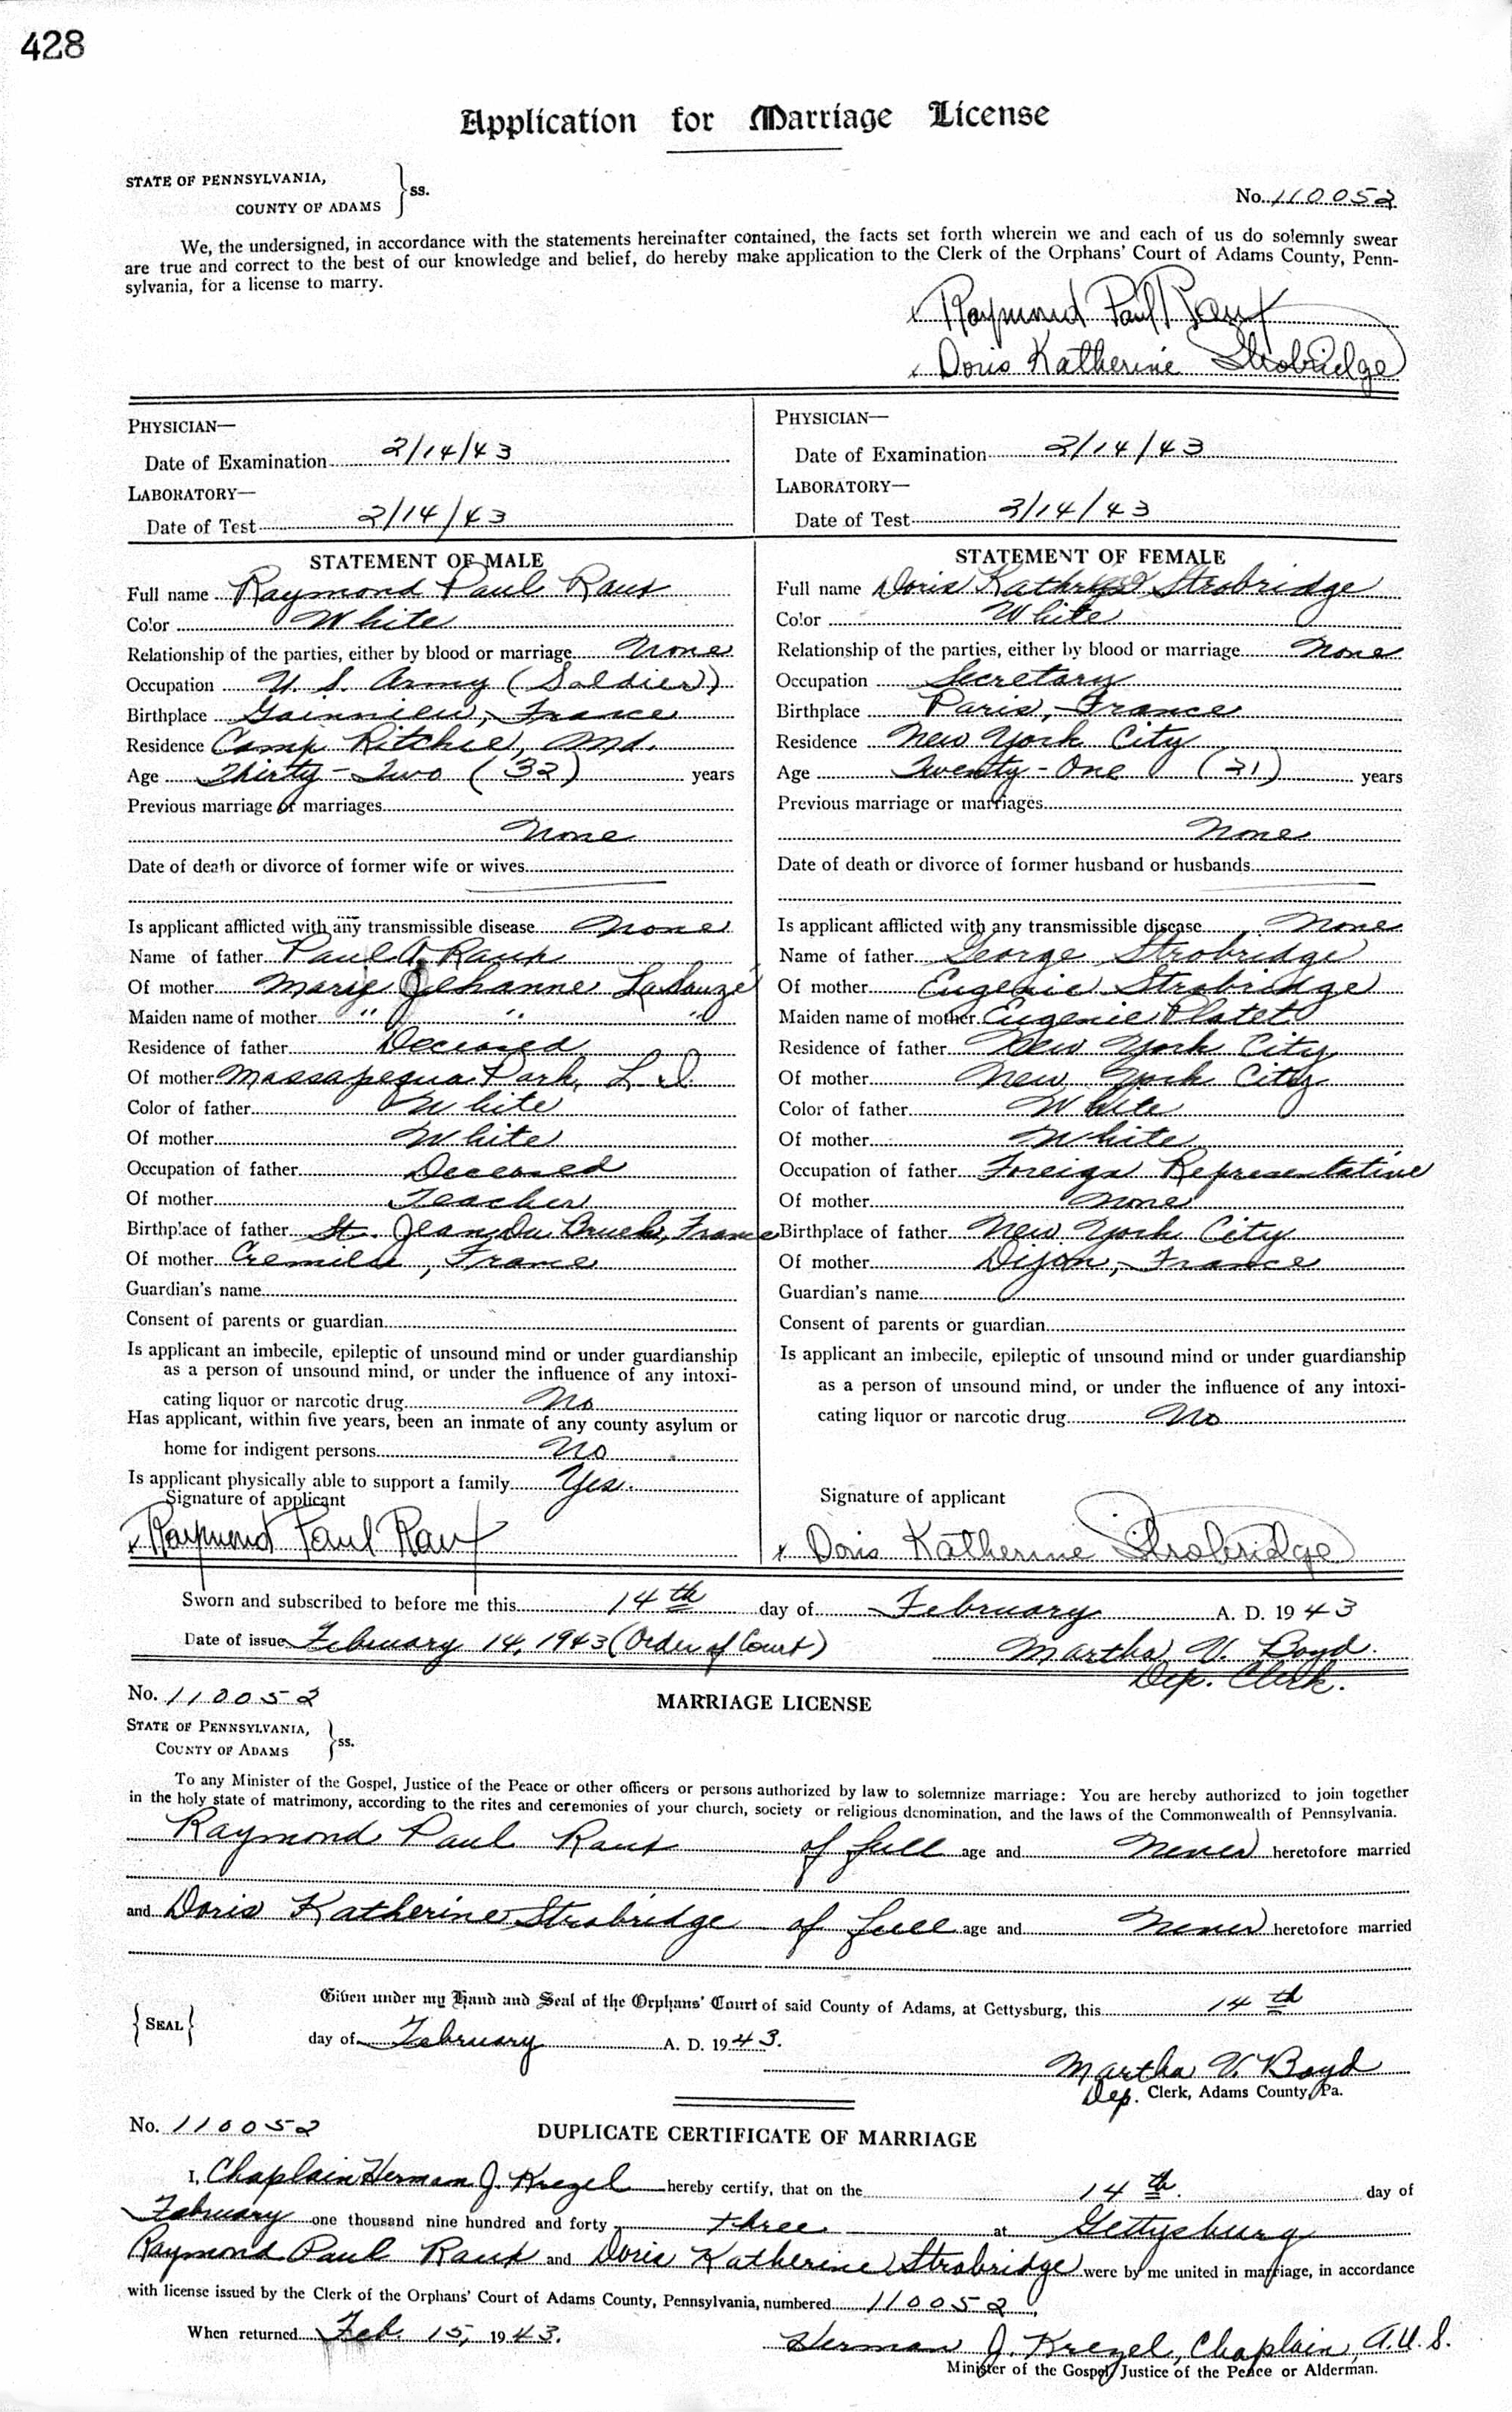 Raymond Raux's marriage certificate February 14,1943